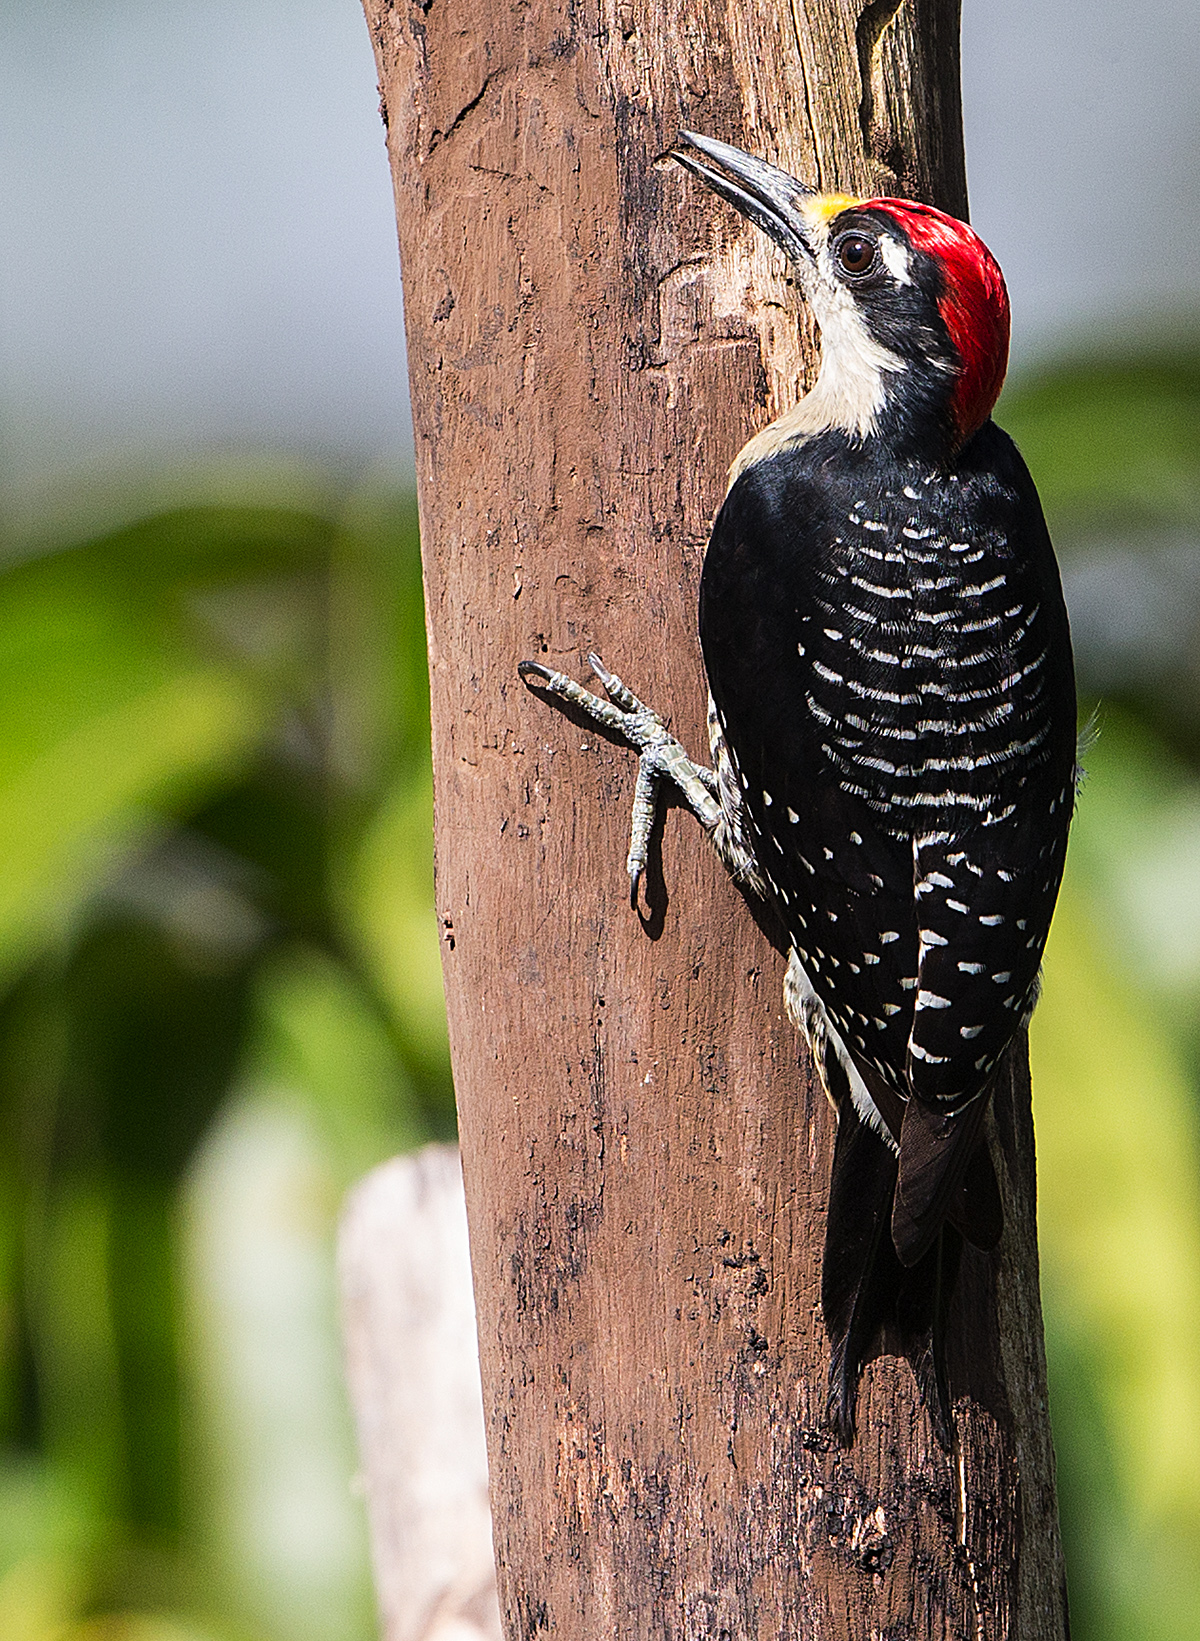 a Black cheeked woodpecker